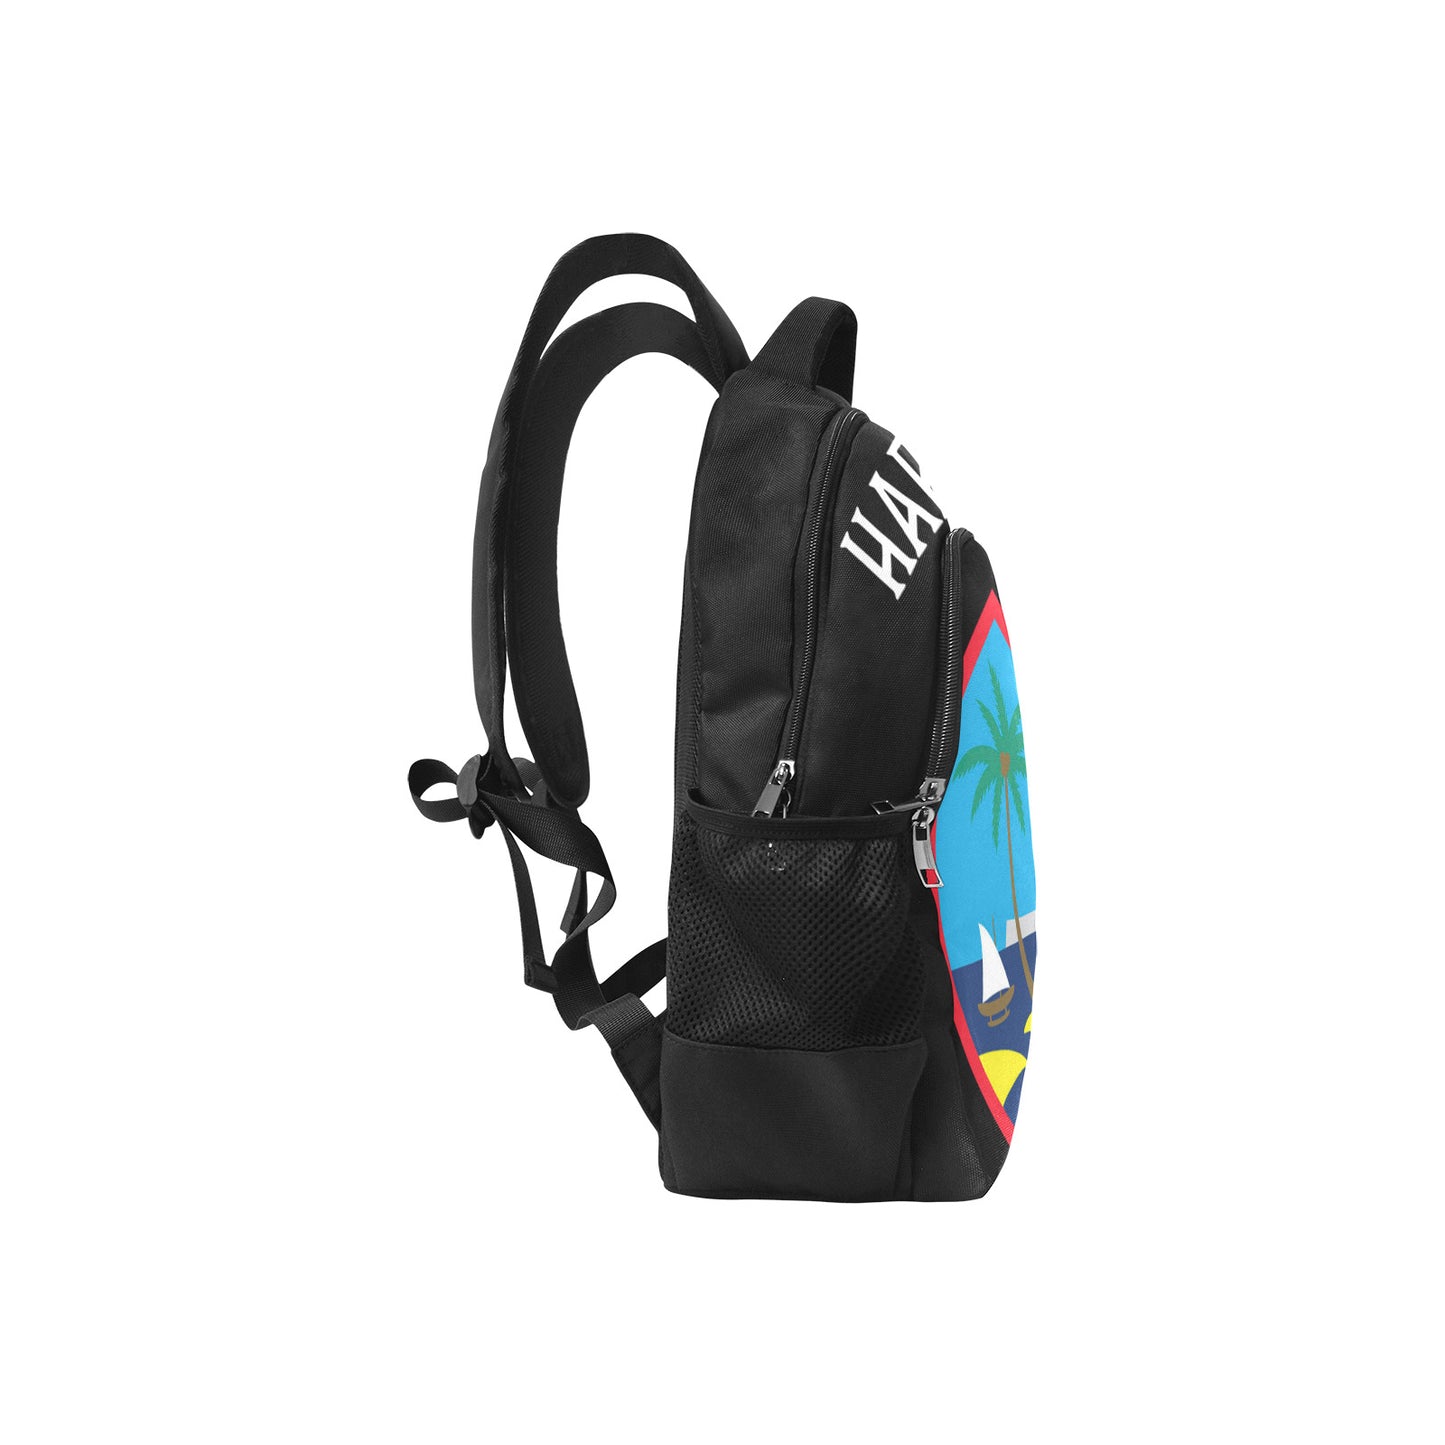 Hafa Adai Guam Tribal Black Multifunctional Backpack